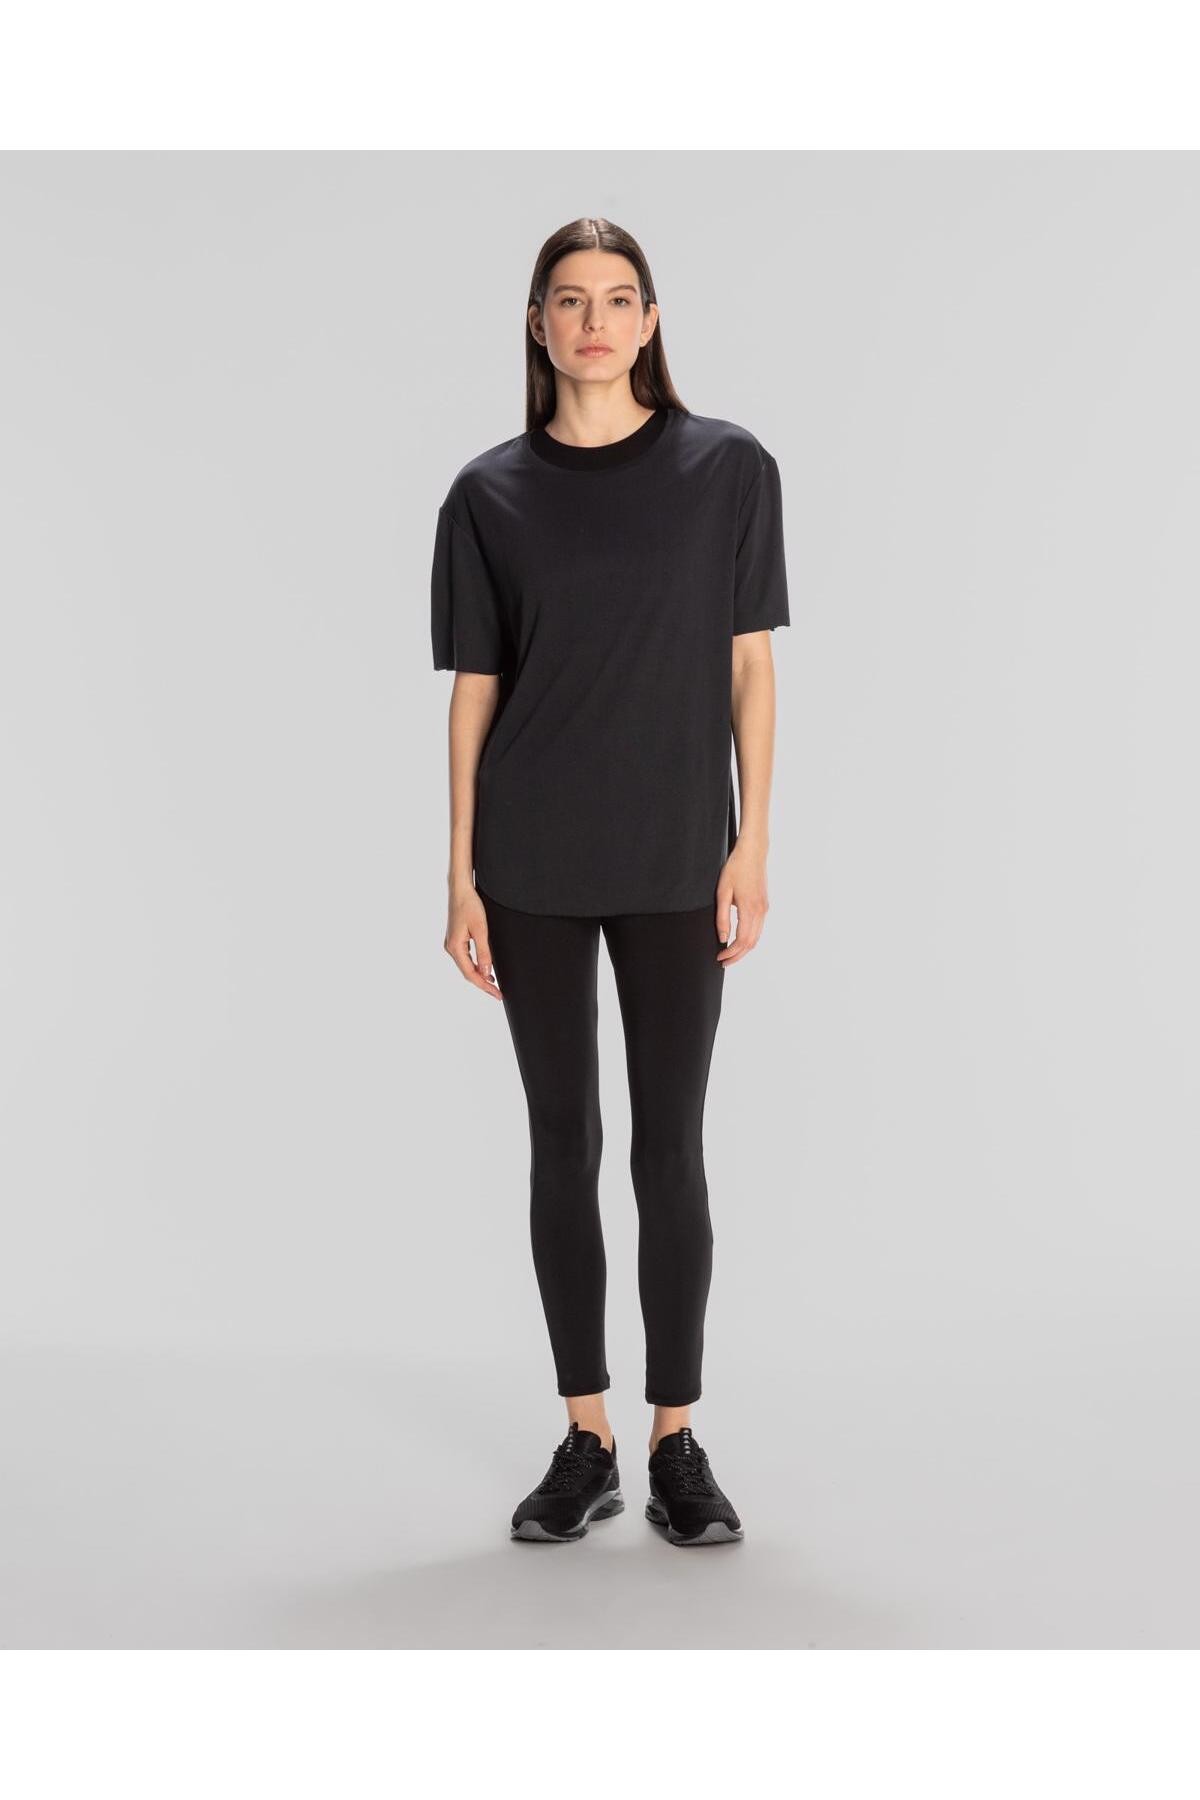 Kappa Elsie T-shirt Kadın Siyah Tişört